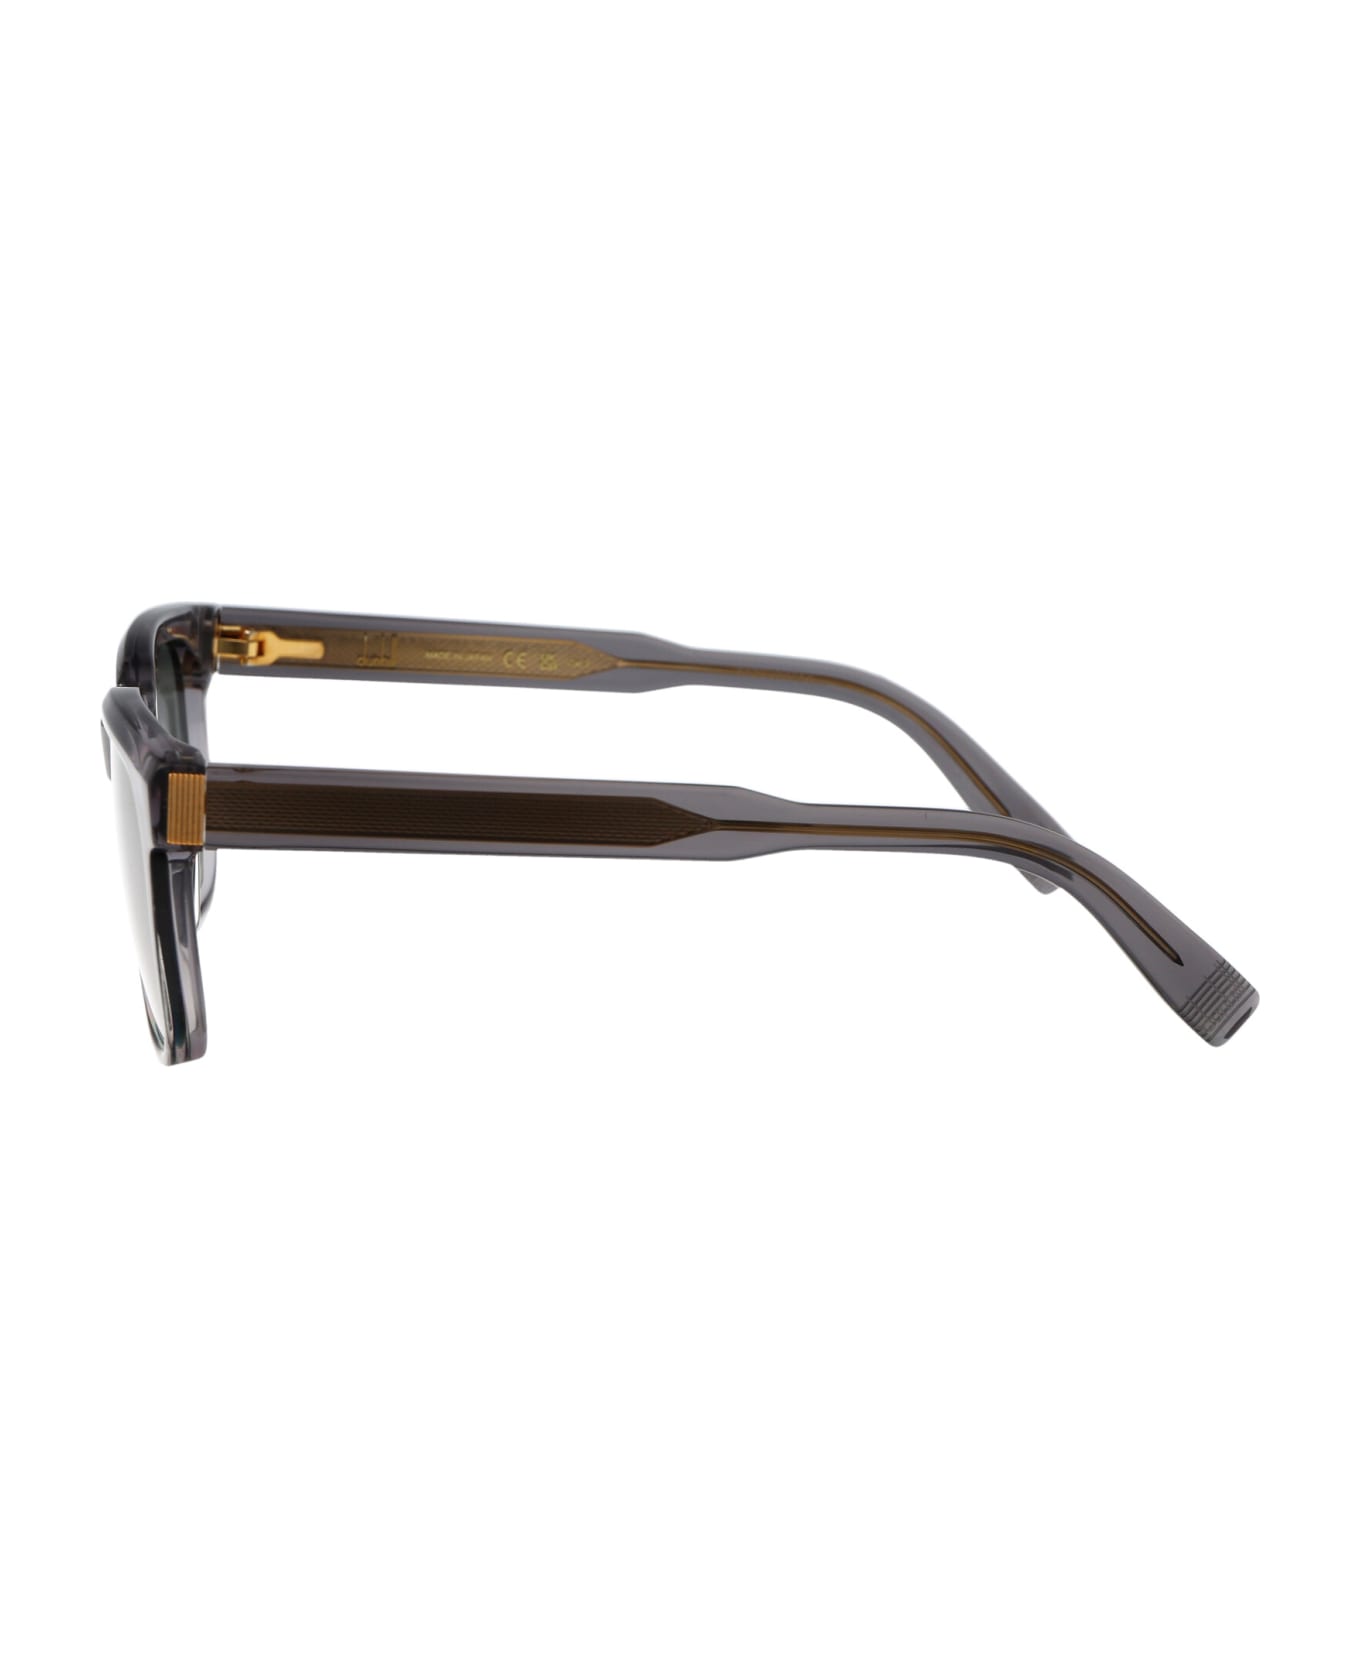 Dunhill Du0002s Sunglasses - 004 GREY GREY GREY サングラス